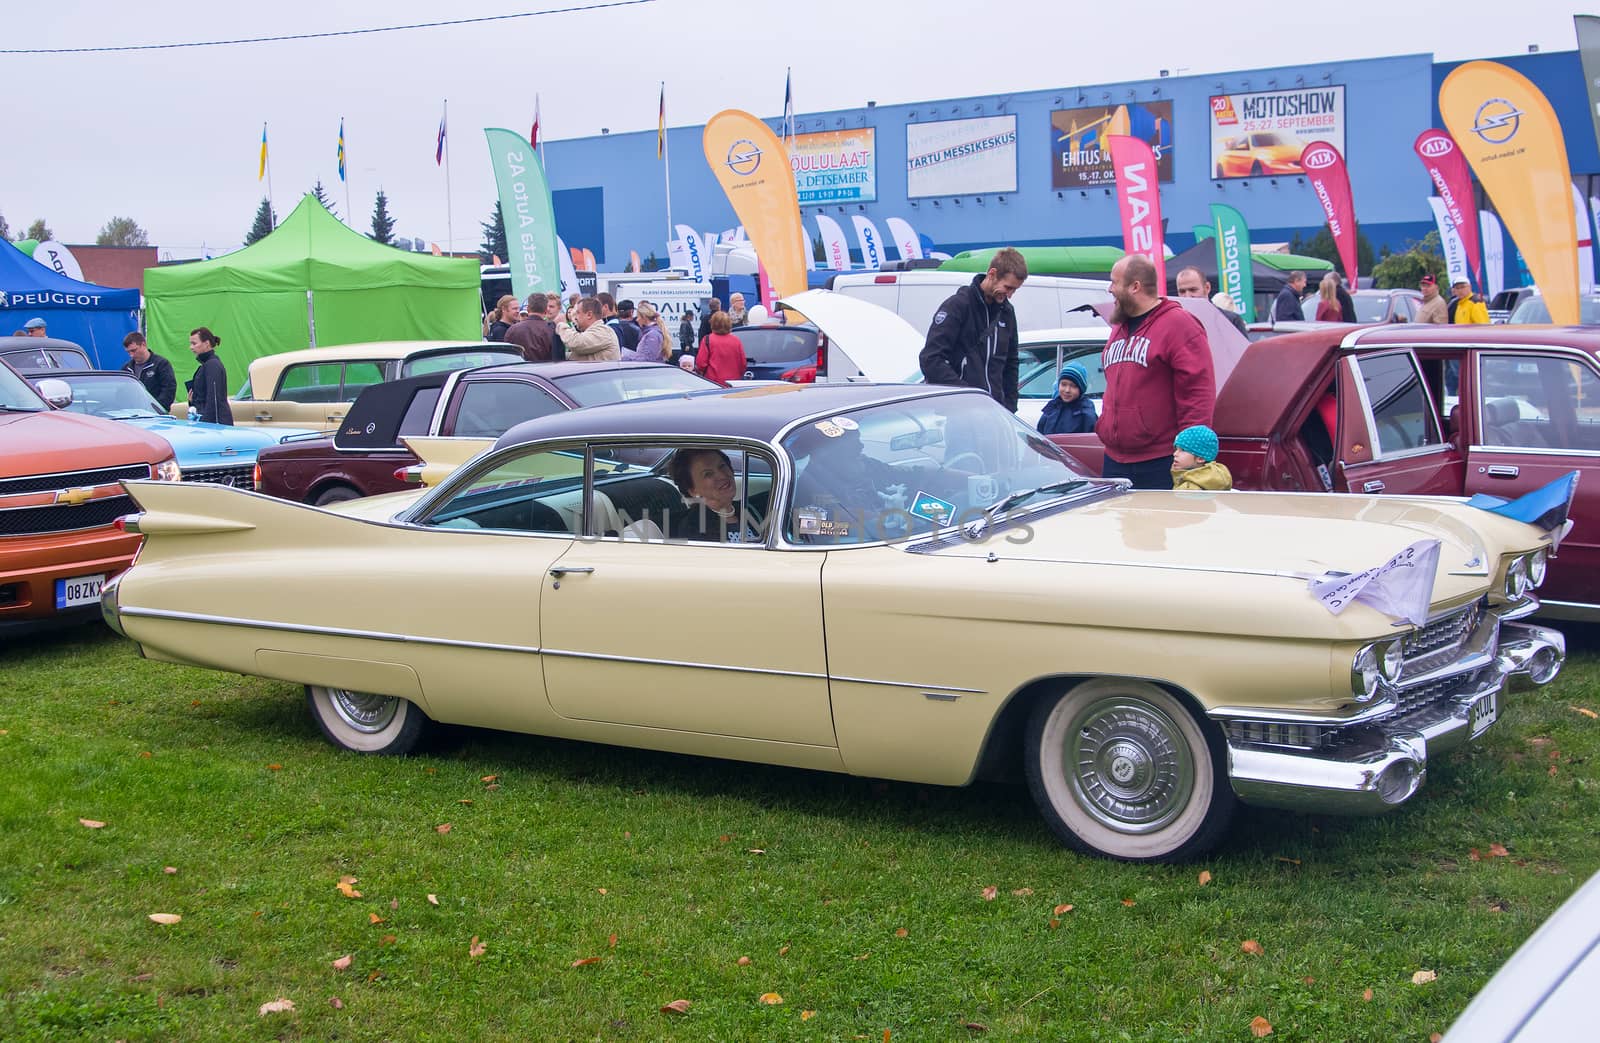 Tartu - September 26: Cadillac Deville at the Tartu Motoshow on September 26, 2015 in Tartu, Estonia